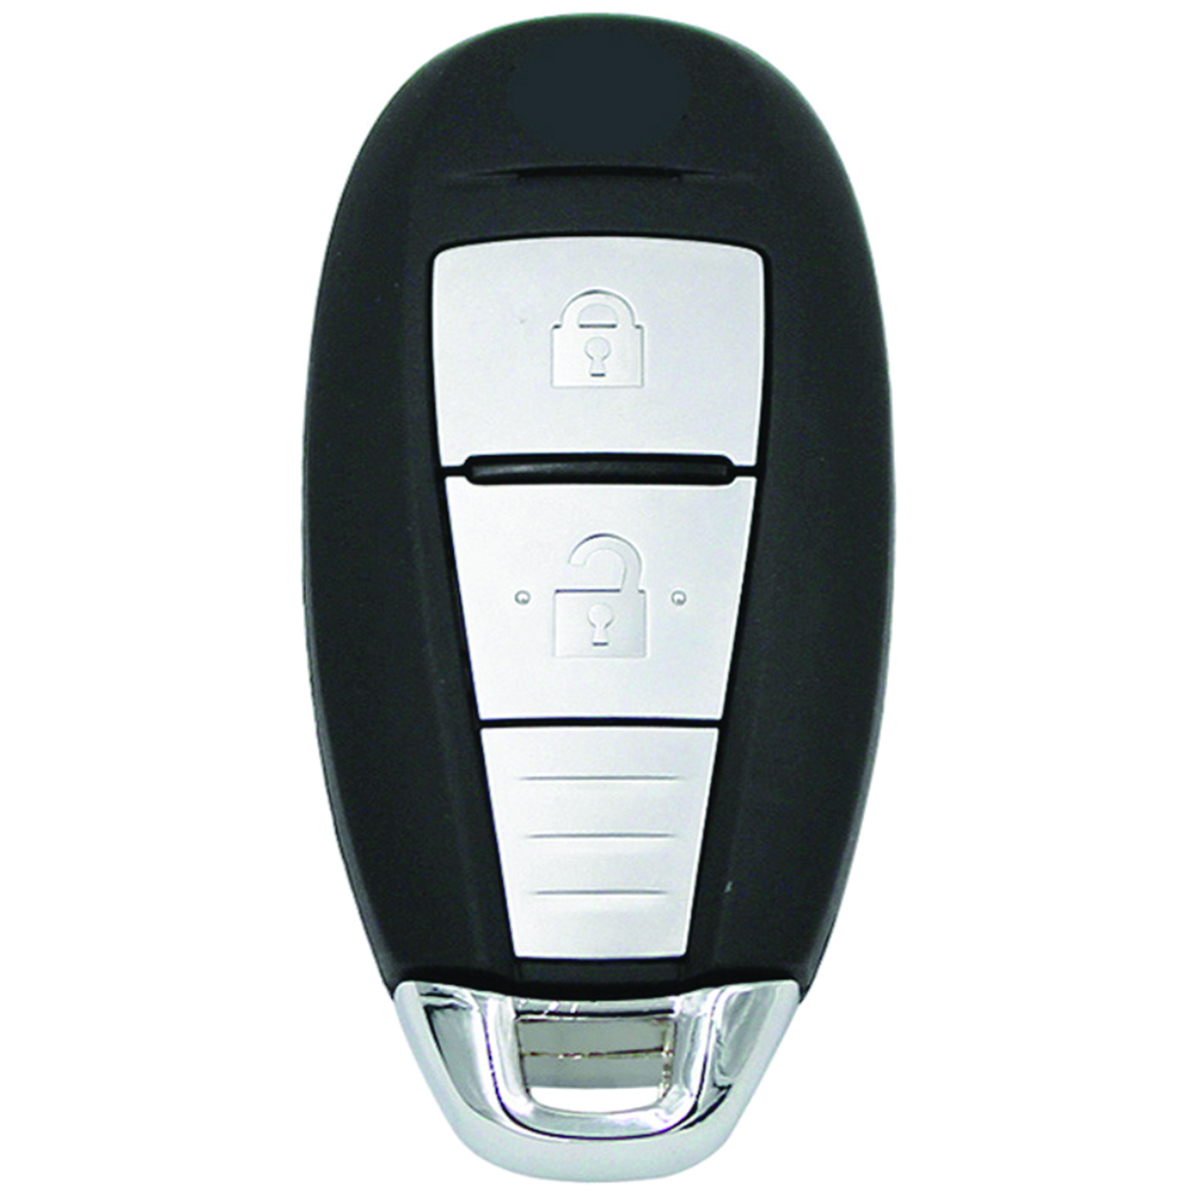 Compatible Smart Key to suit Suzuki 433MHZ